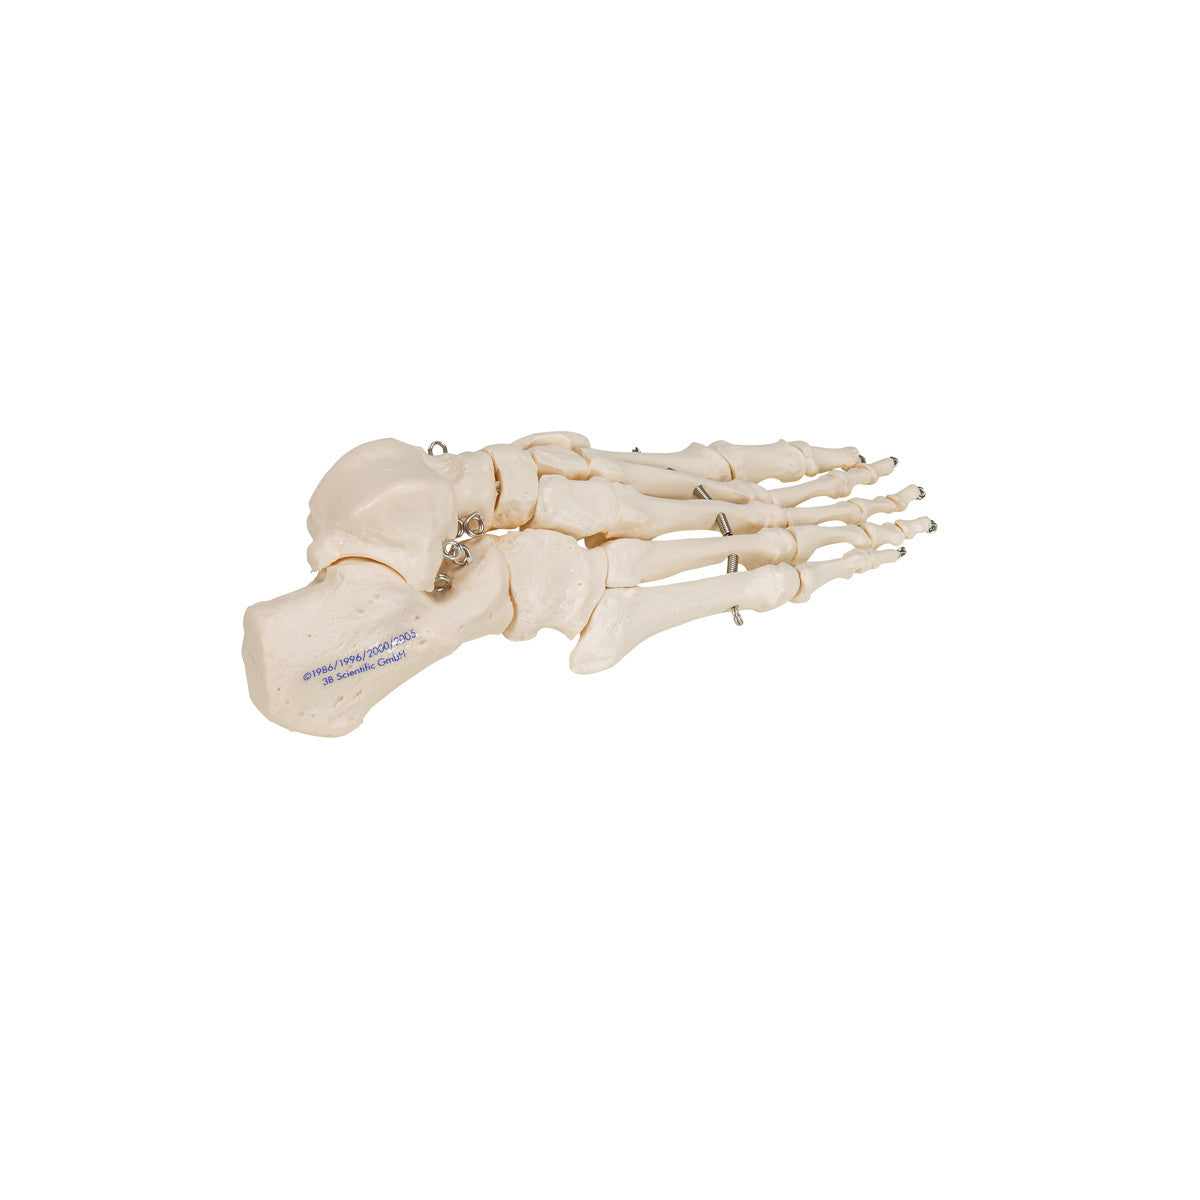 Foot Skeleton | 3B Scientific A30